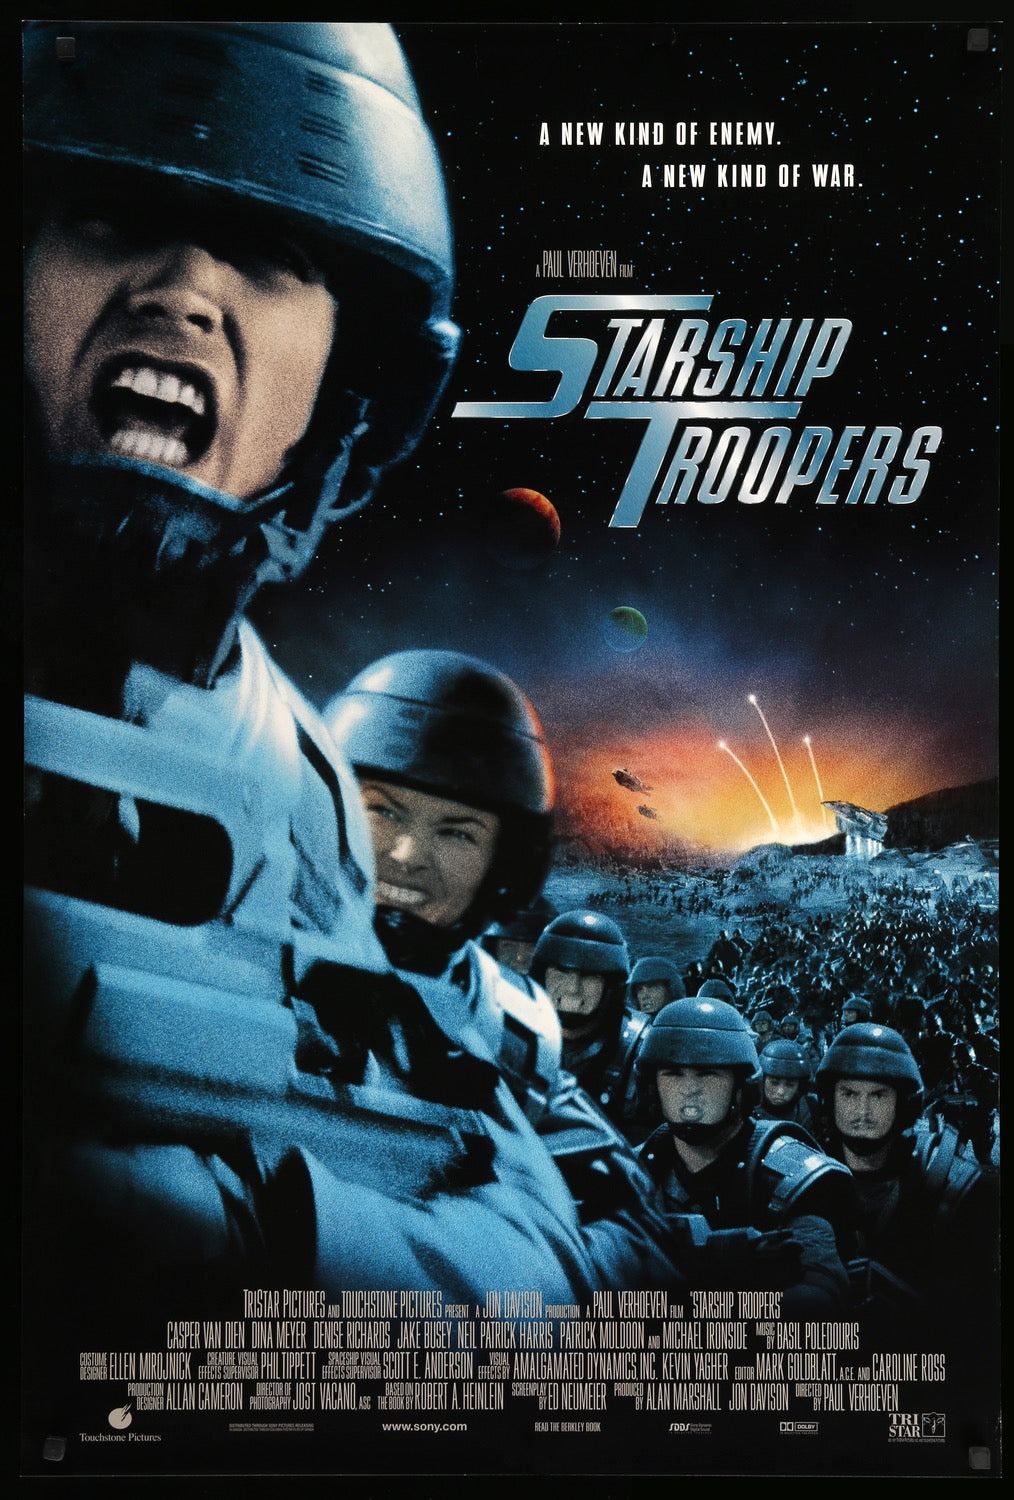 Starship Troopers (1997) original movie poster for sale at Original Film Art